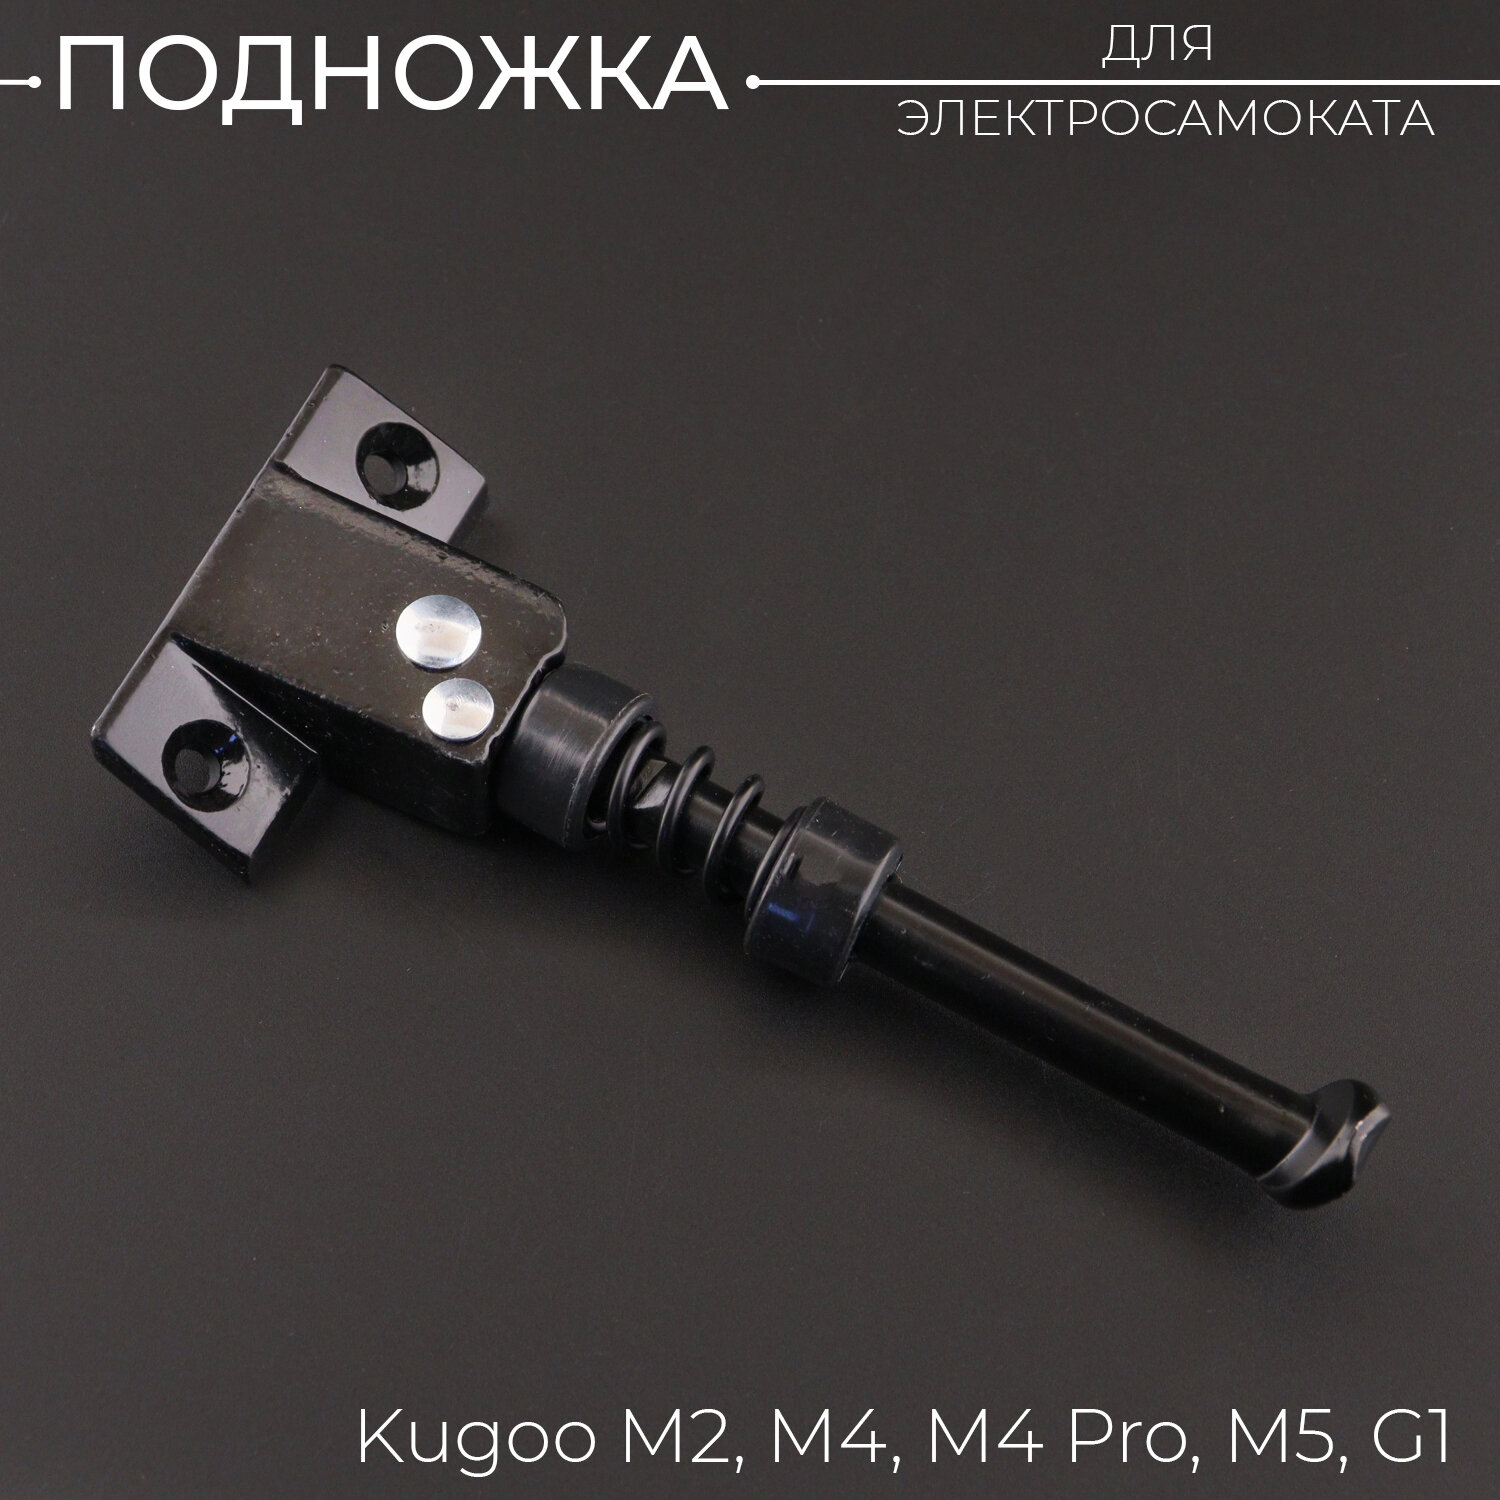 Подножка для Электросамоката Kugoo M2 M4 M4 Pro M5 G1